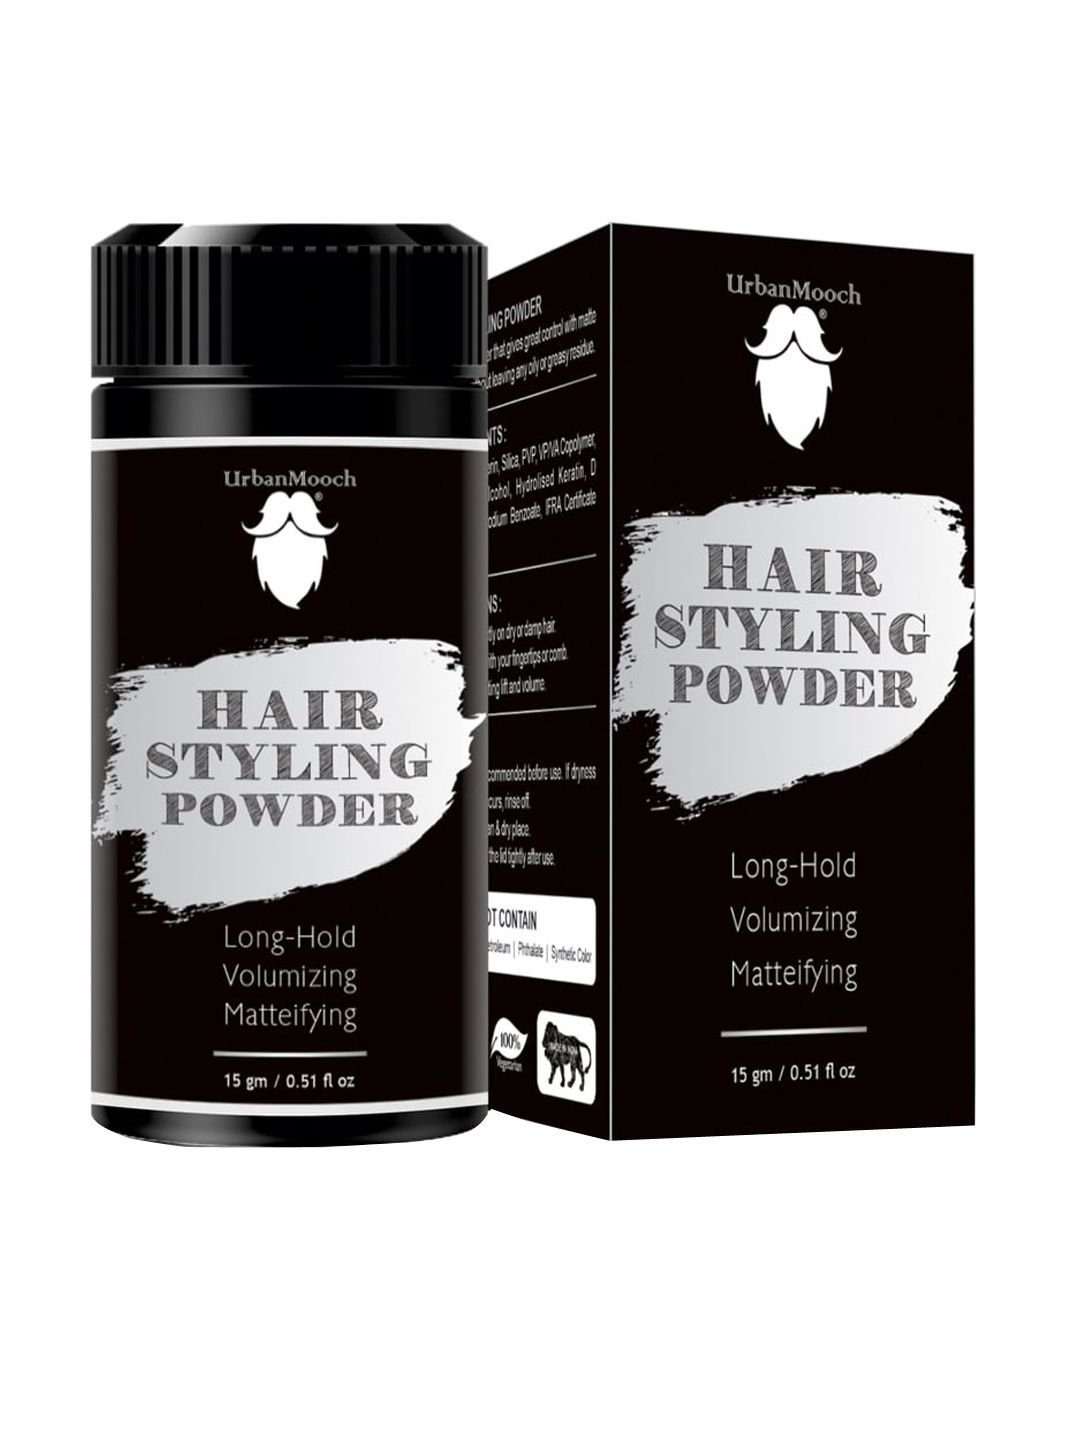 UrbanMooch Hair Styling Powder 15gm Price in India